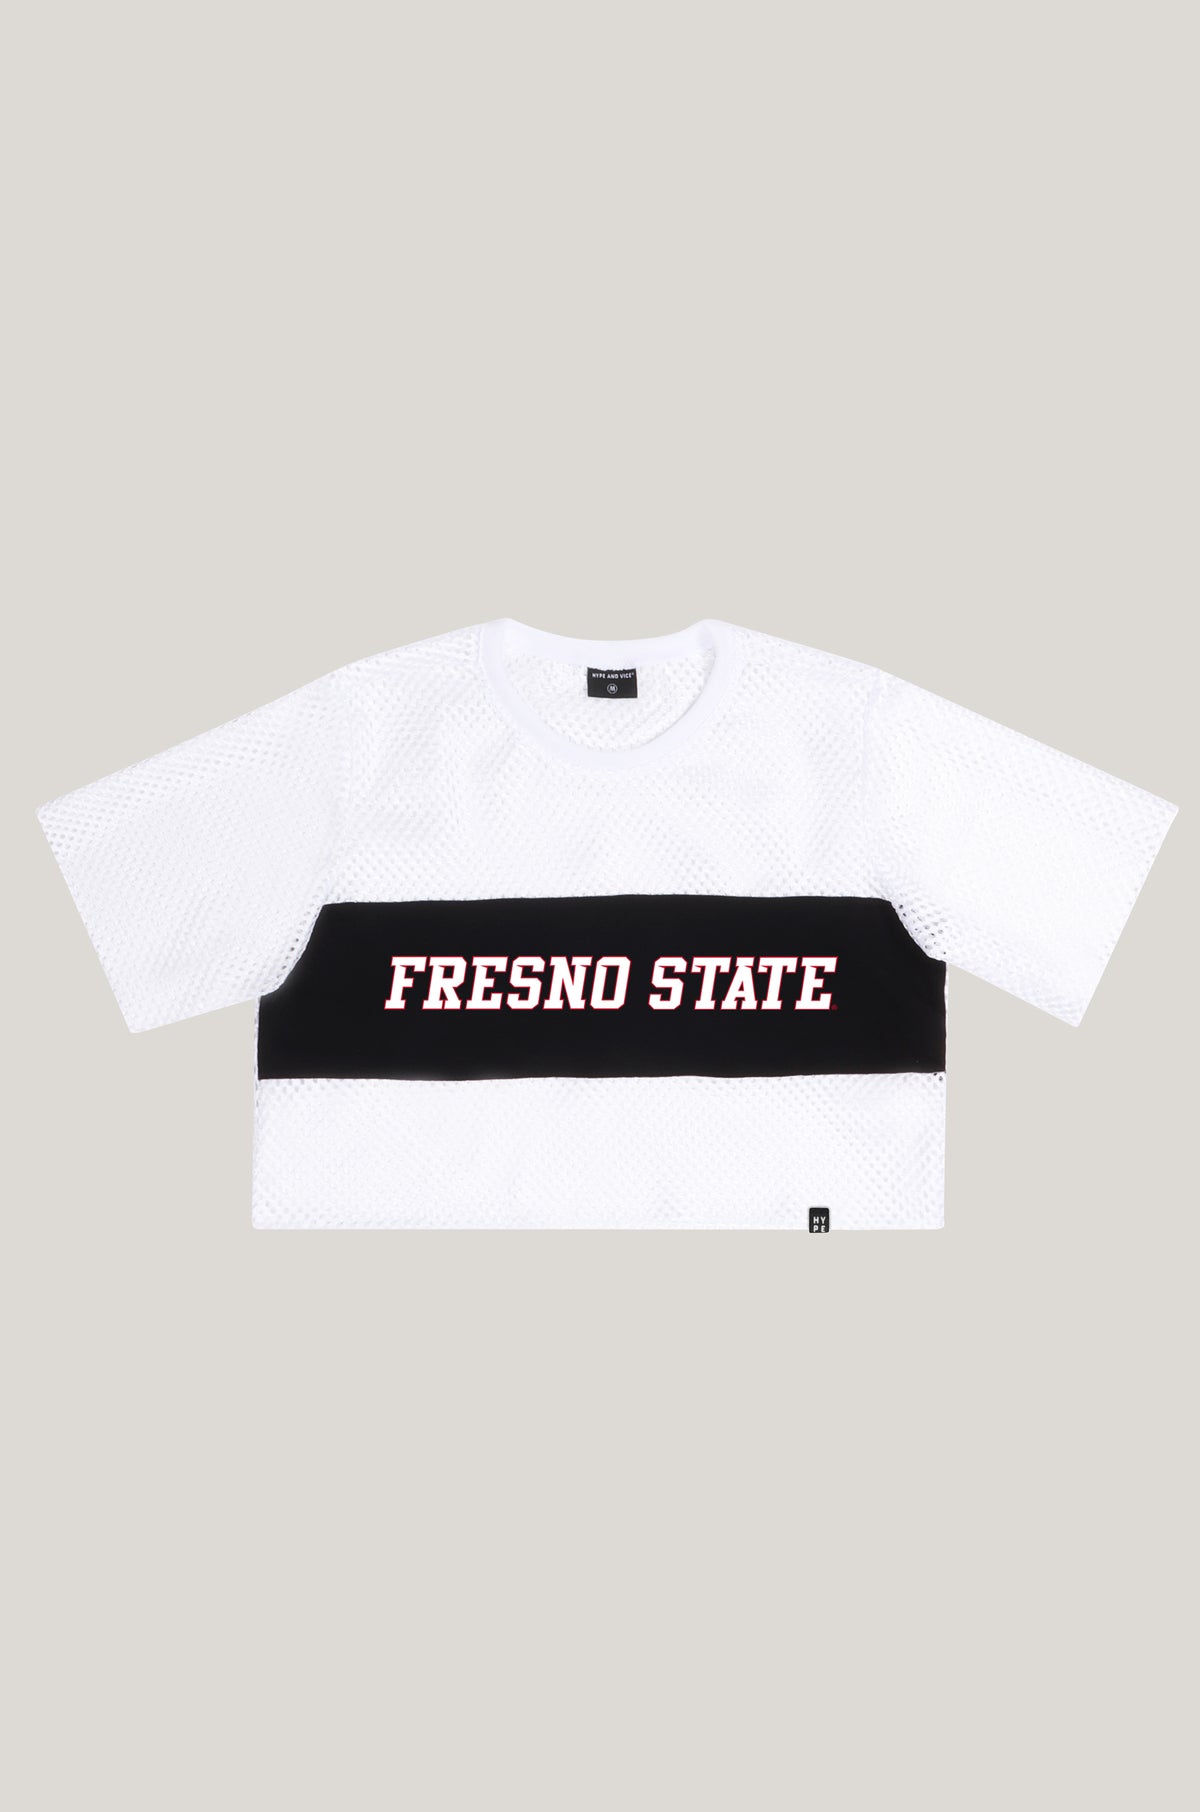 Fresno State Mesh Tee